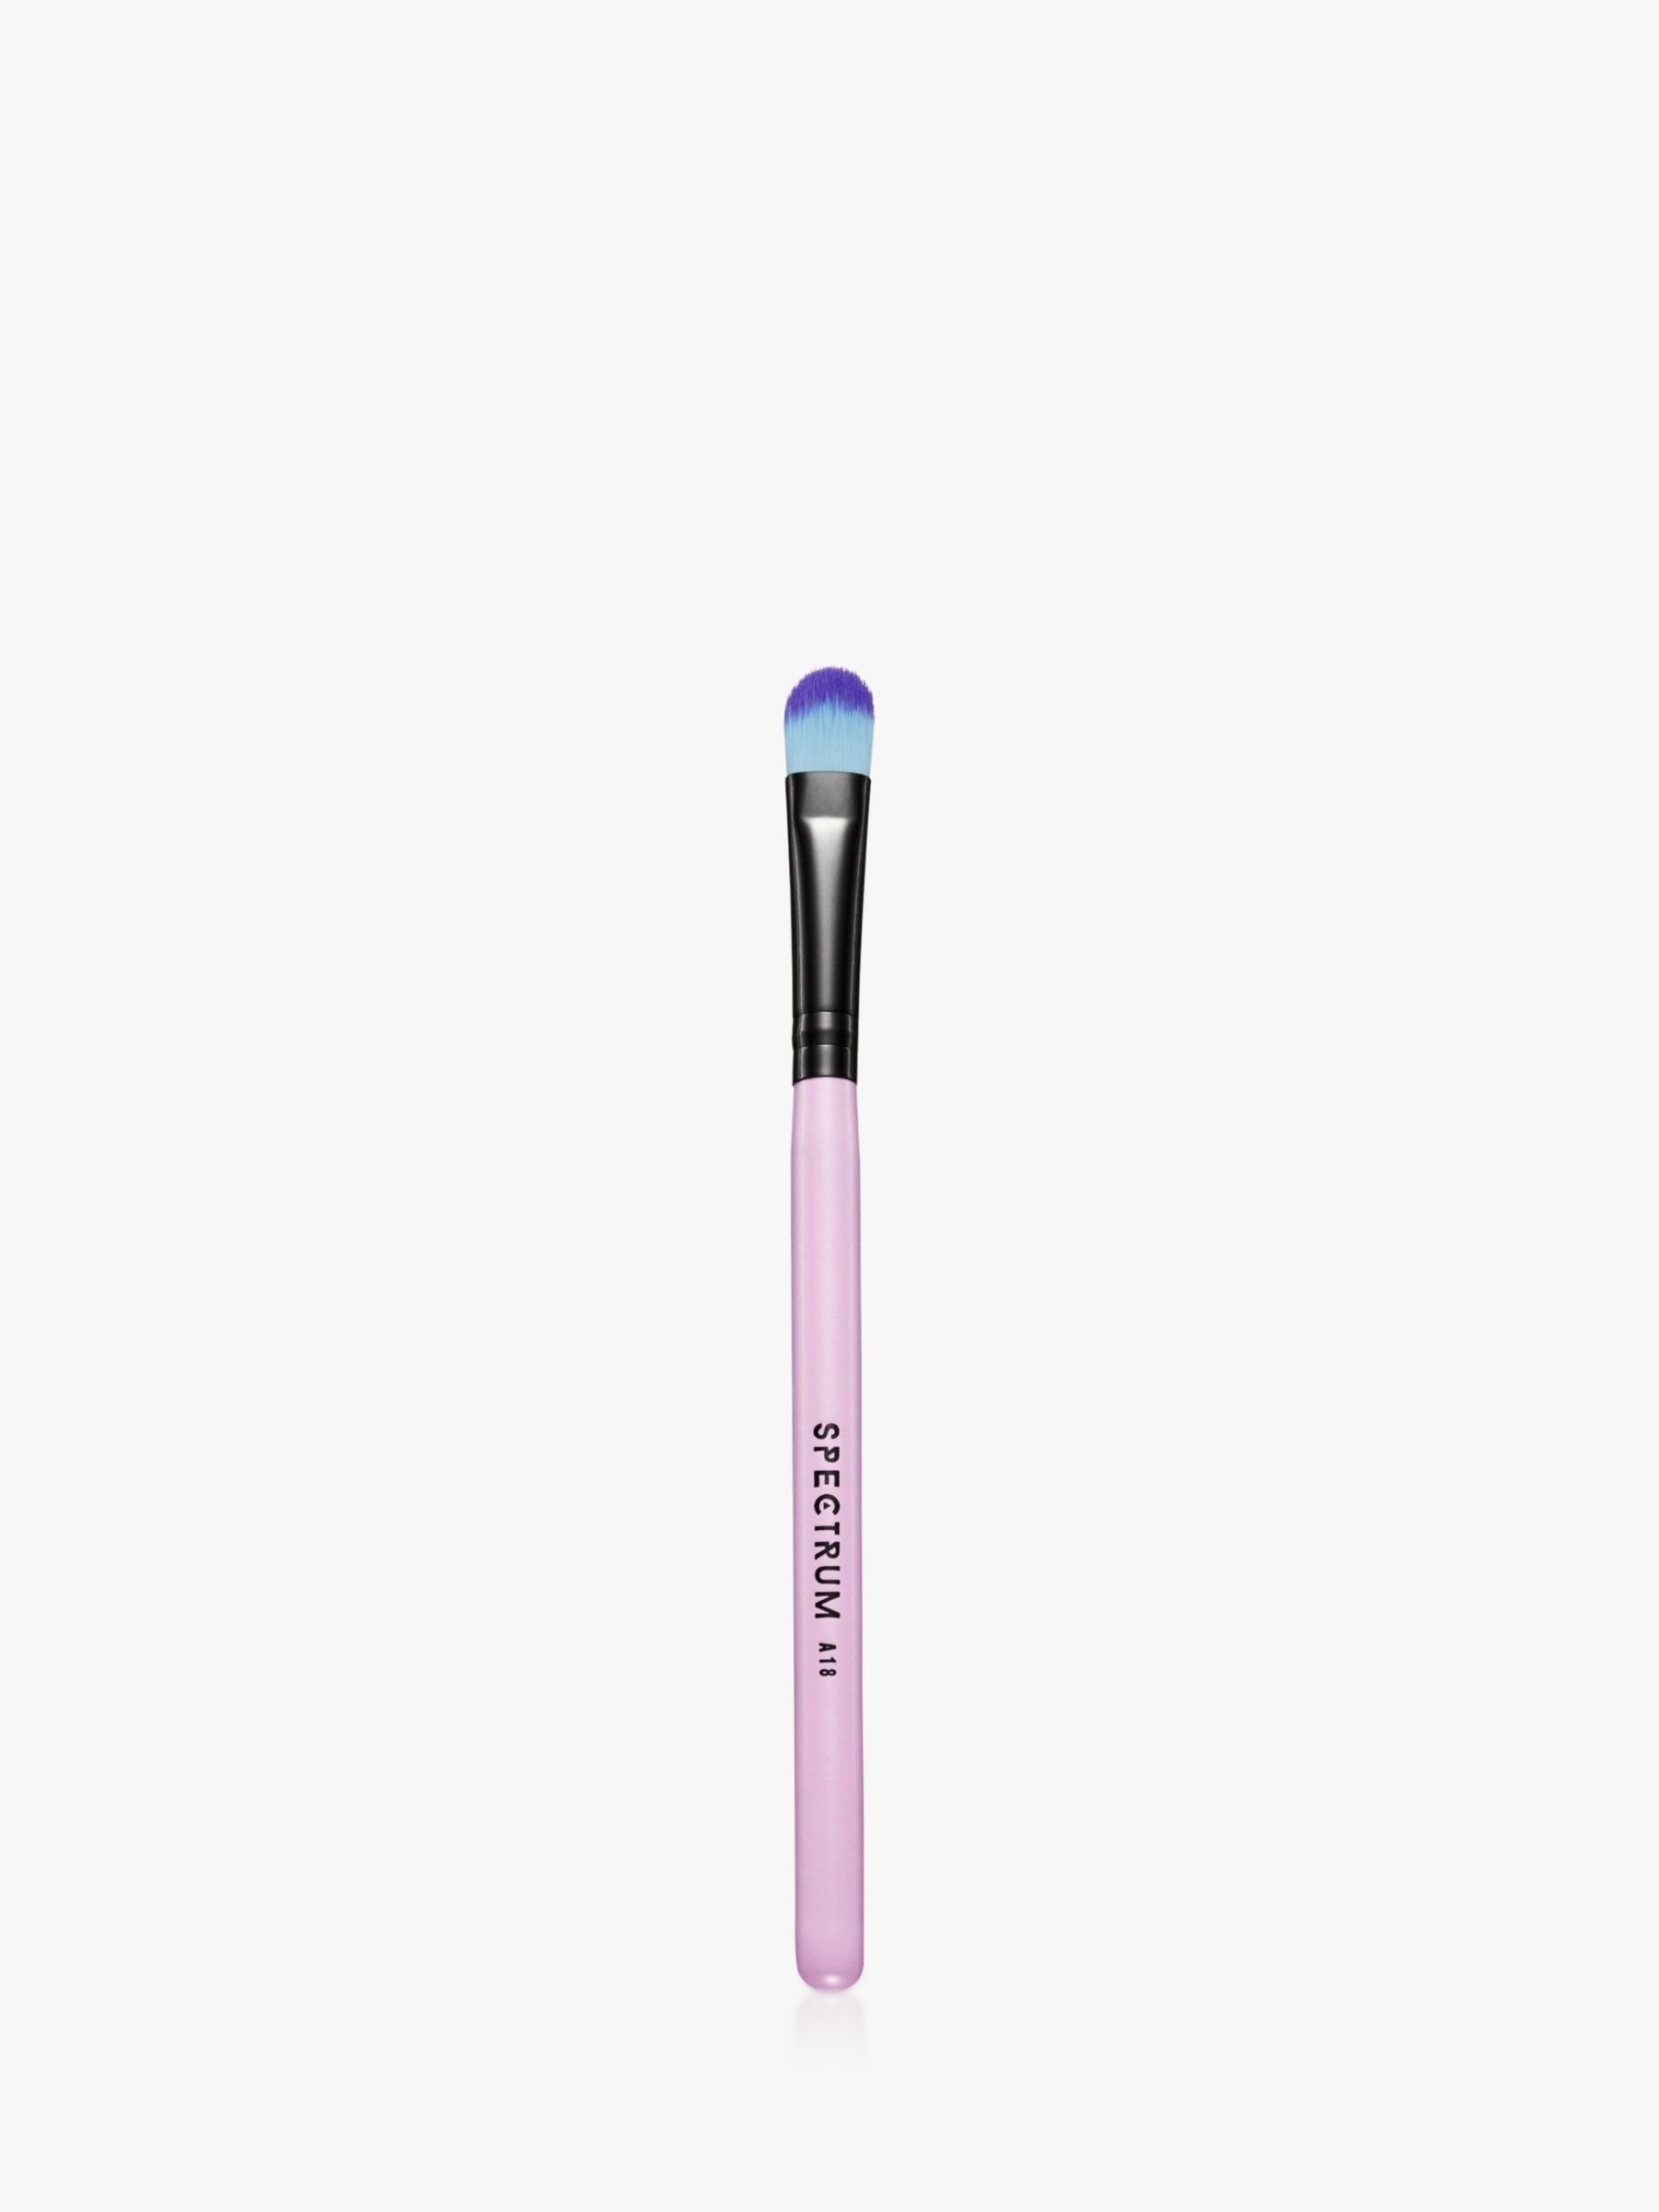 Spectrum Oval Concealer Makeup Brush 1